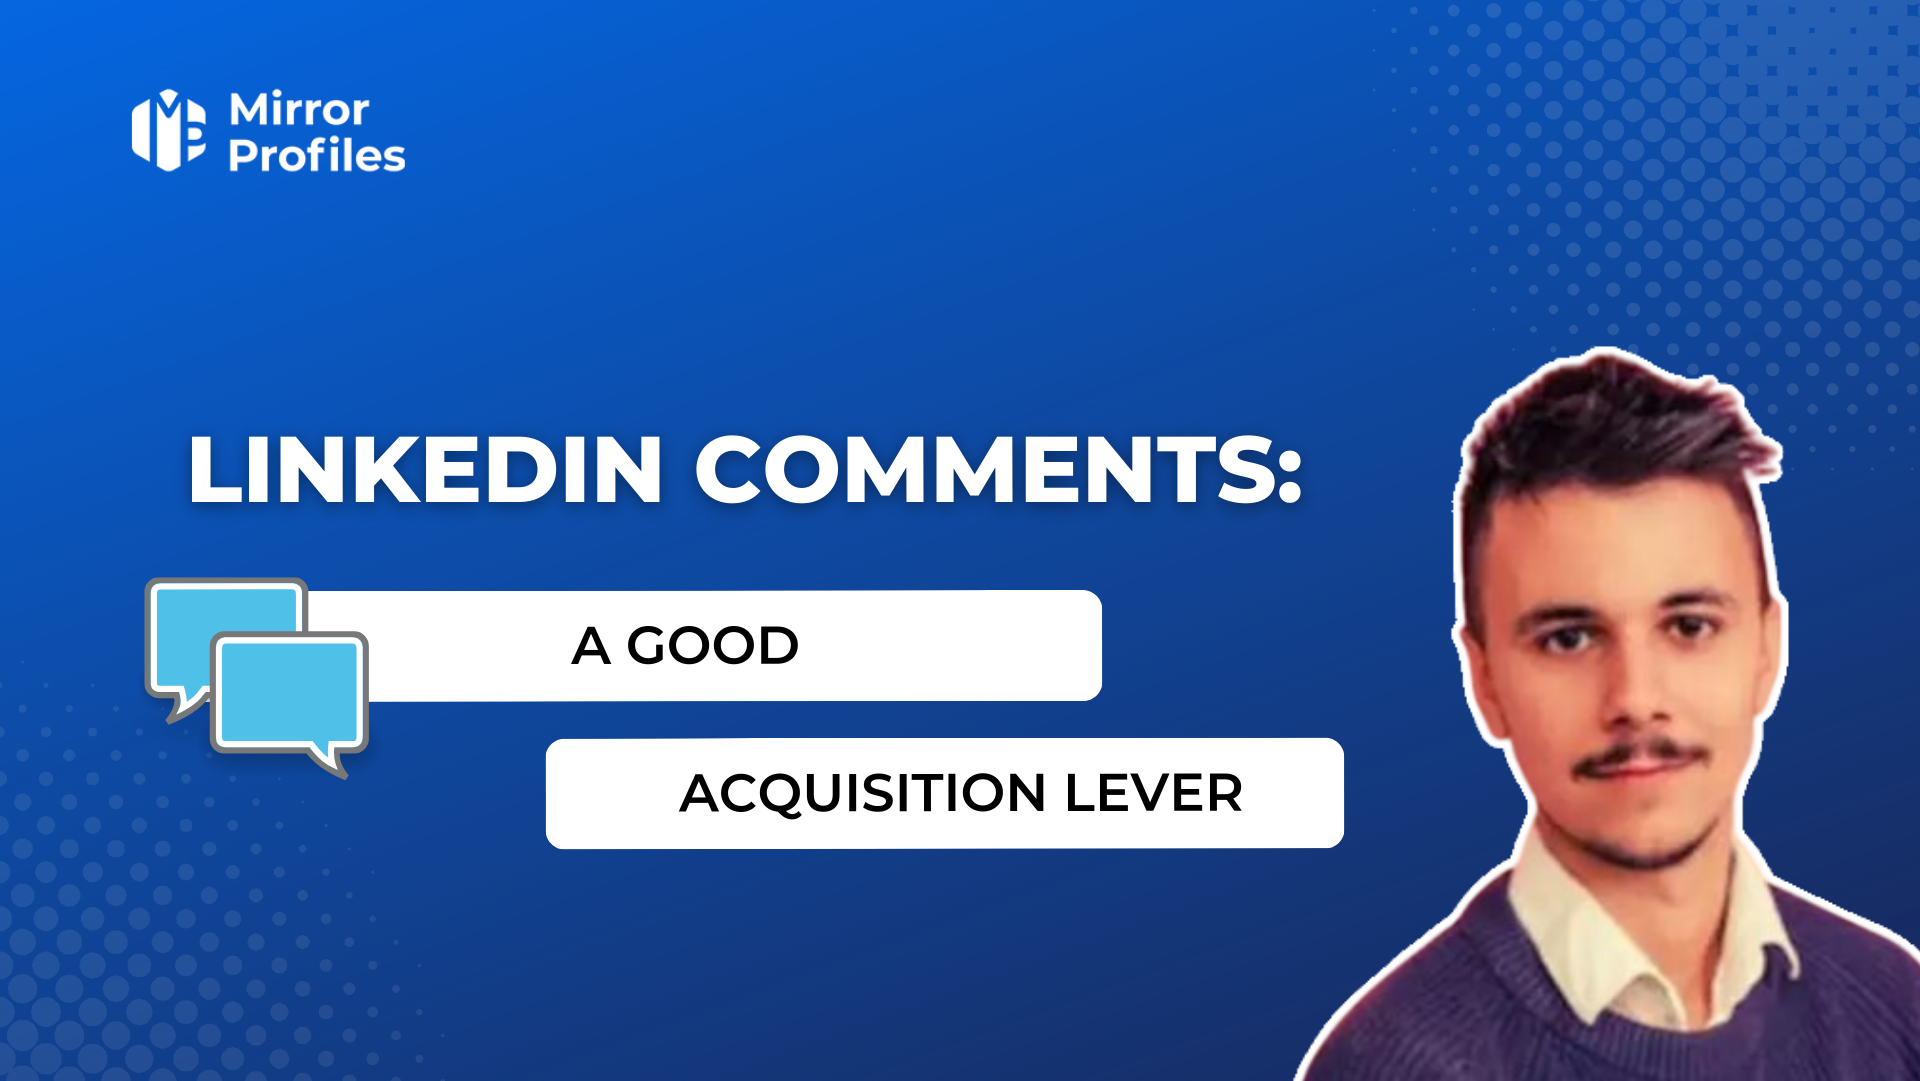 Linkedin comments: a good acquisition lever